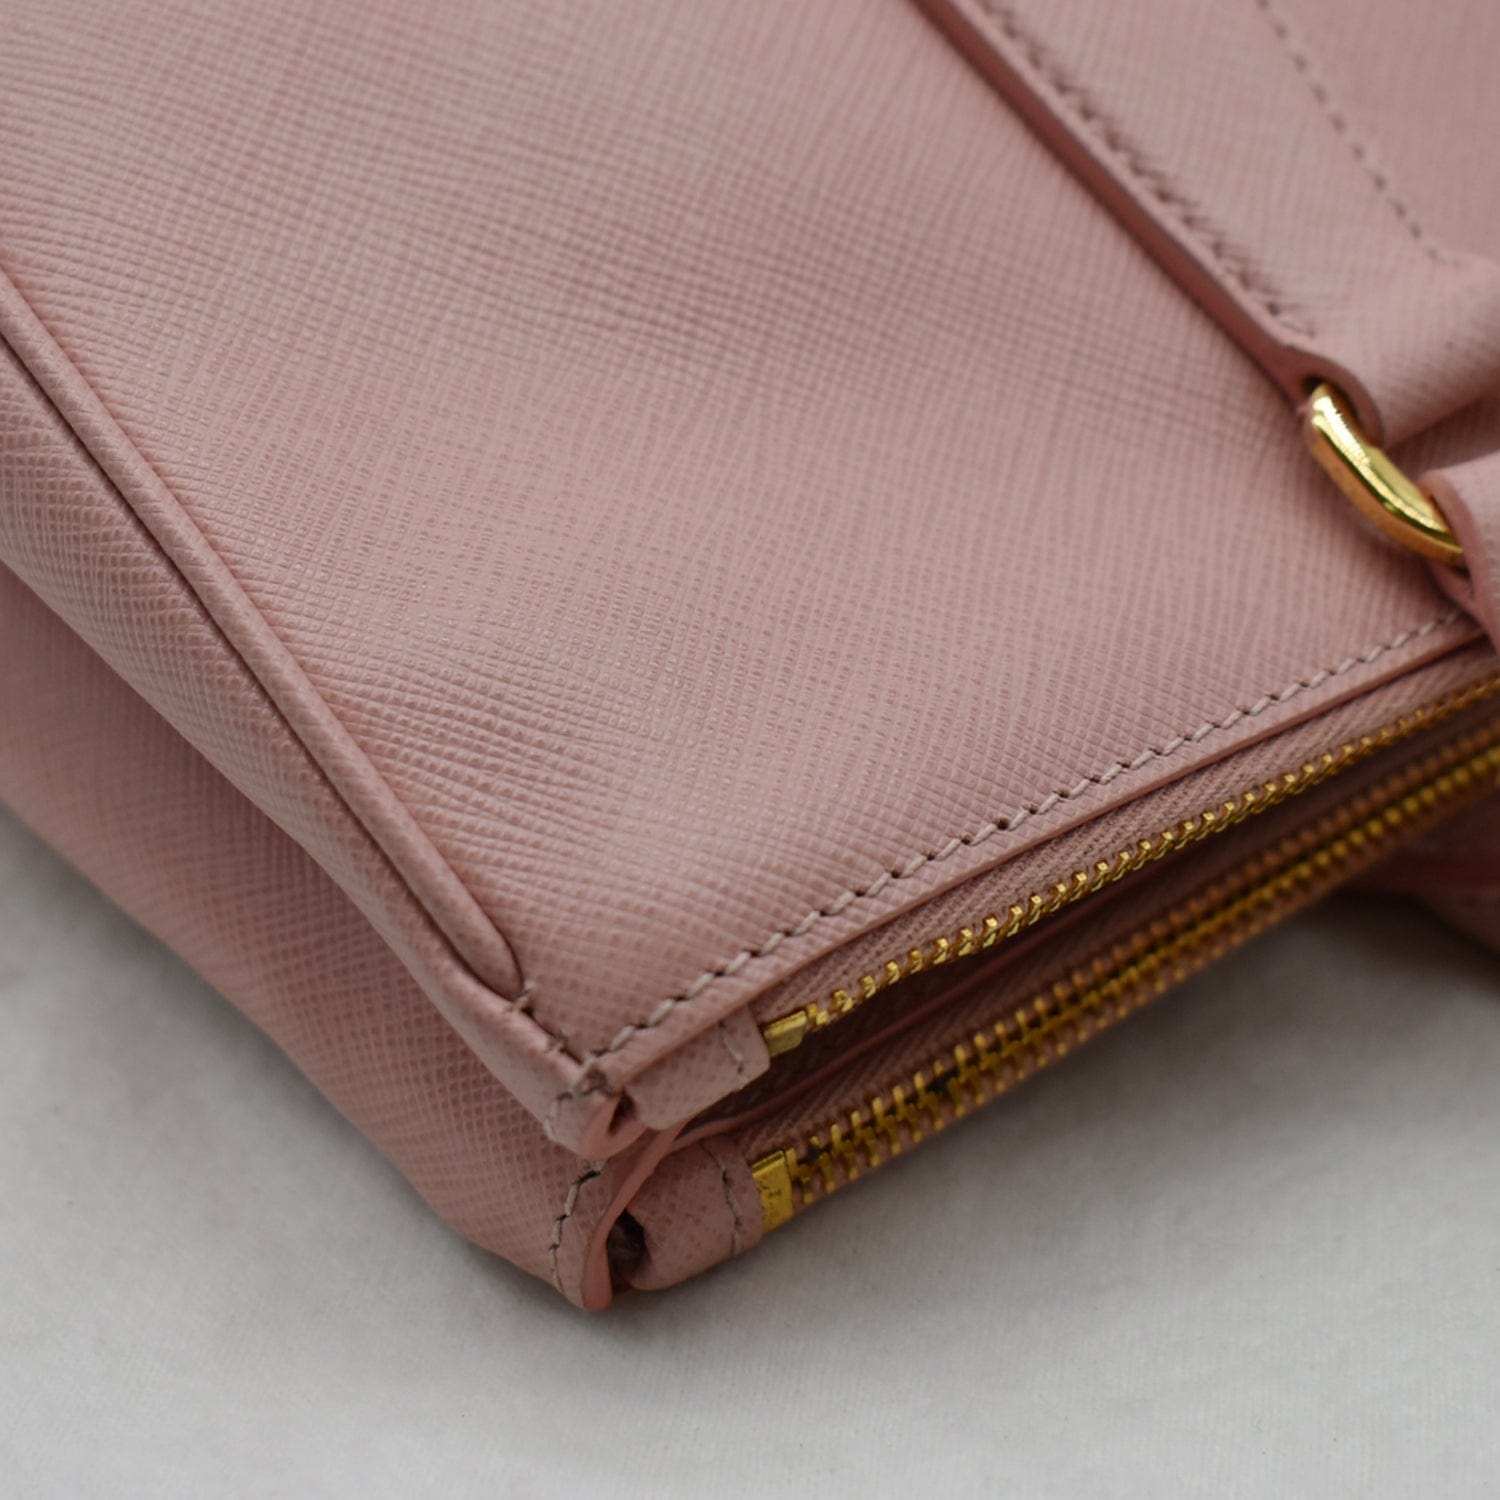 Prada Saffiano Leather Mini Bag, Women, Petal Pink